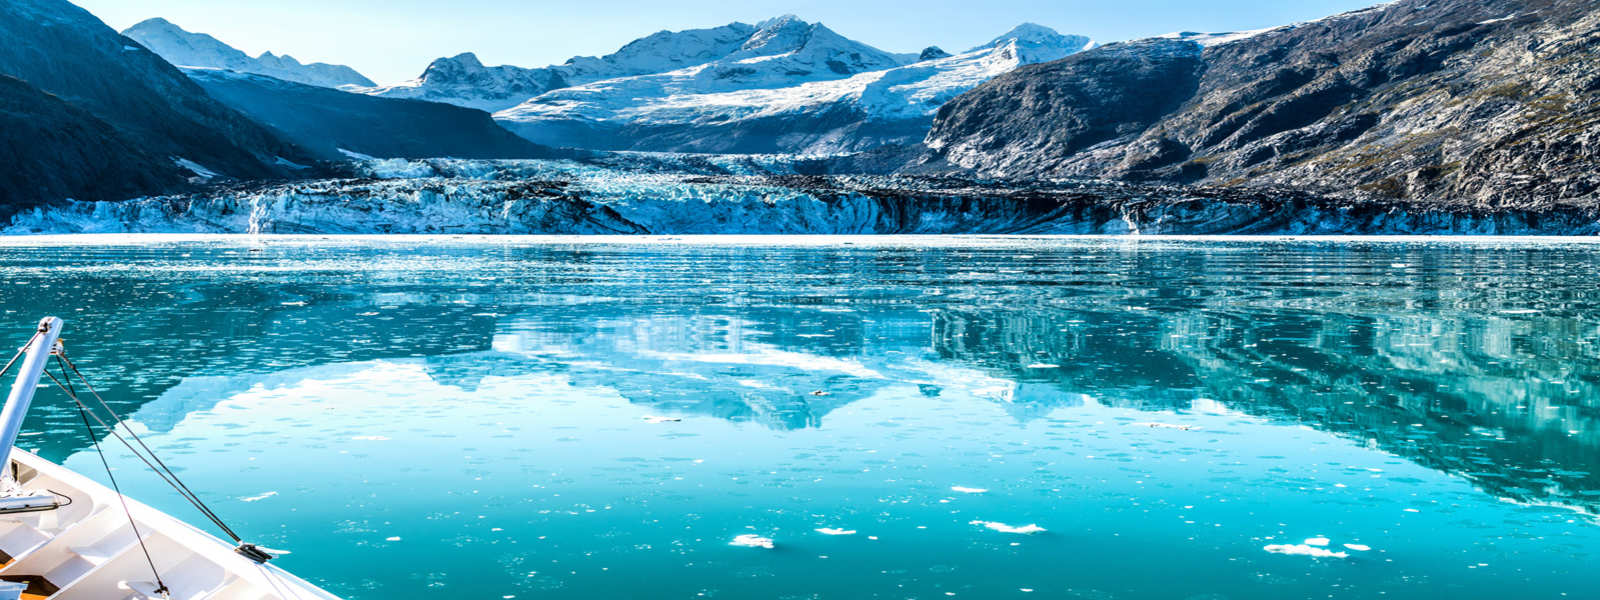 Icy Alaskan landscape